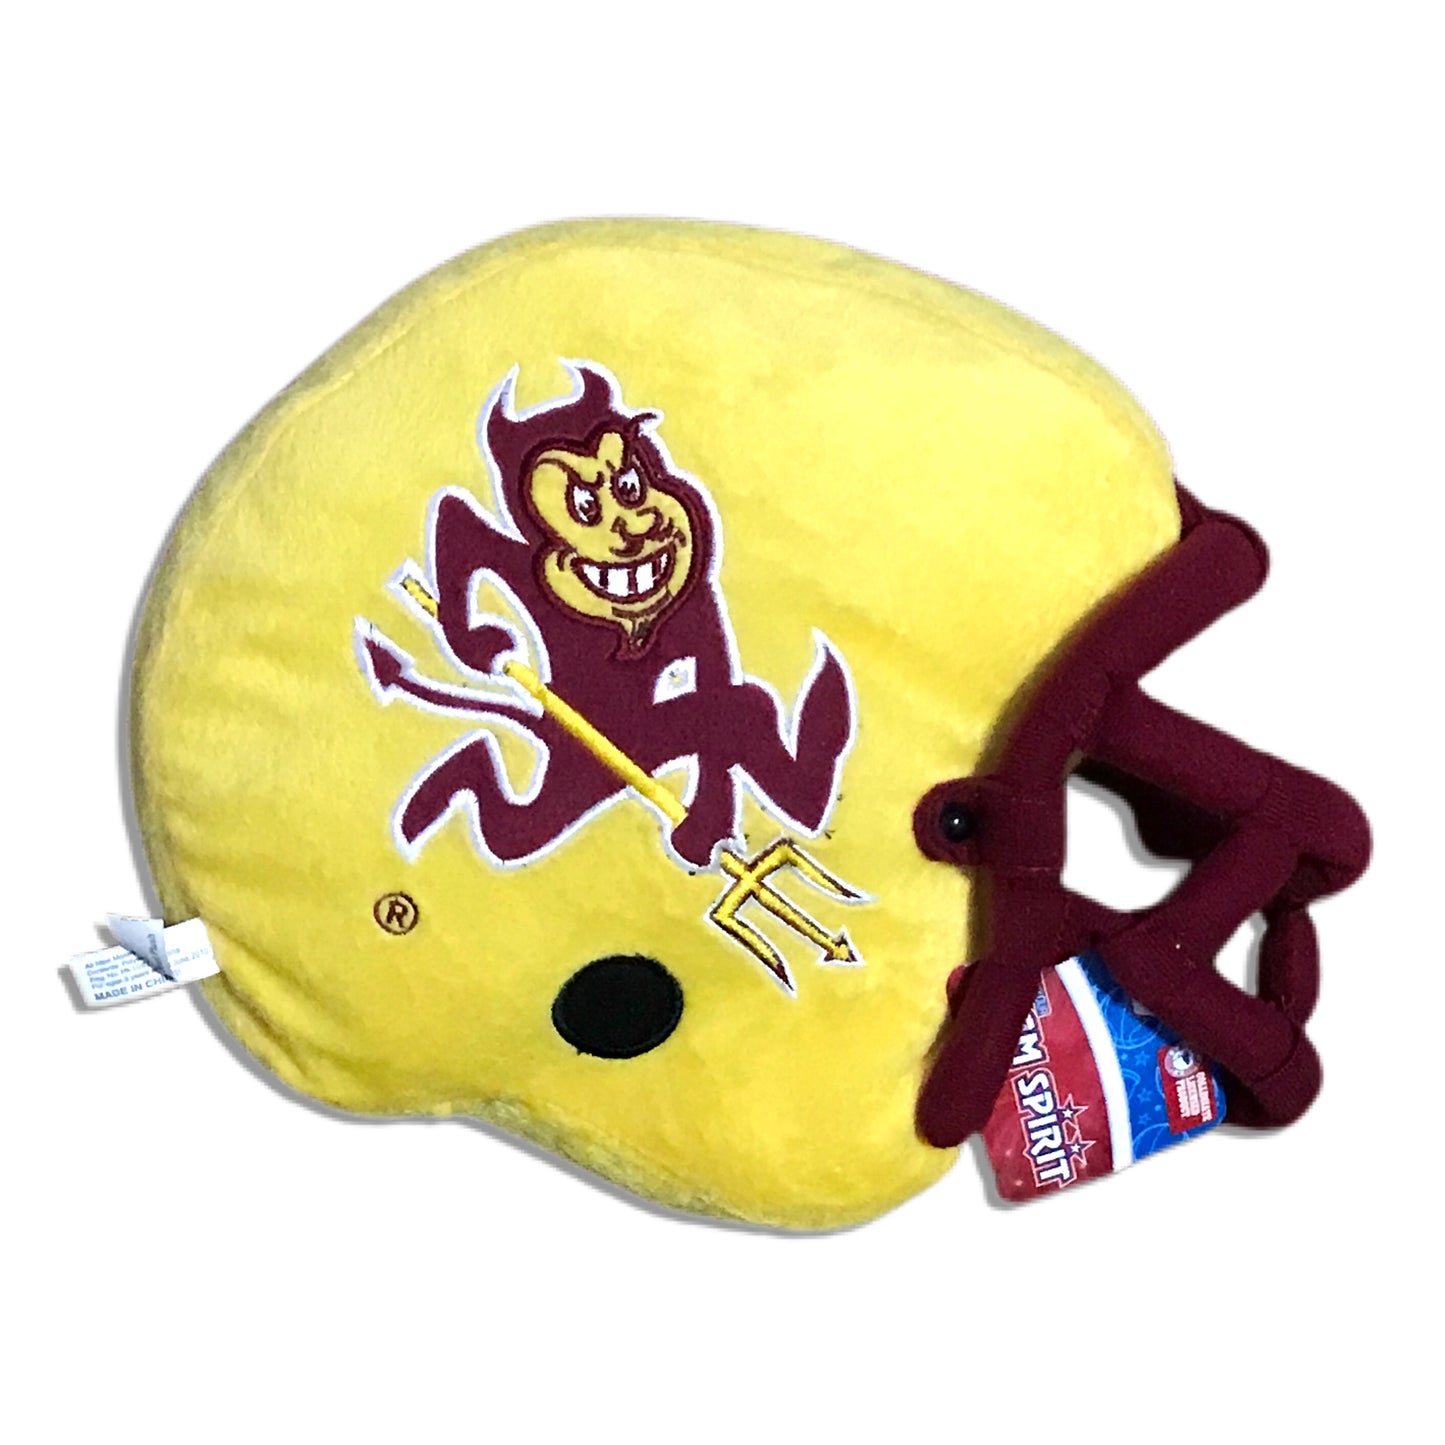 Arizona State Football Helmet Pillow